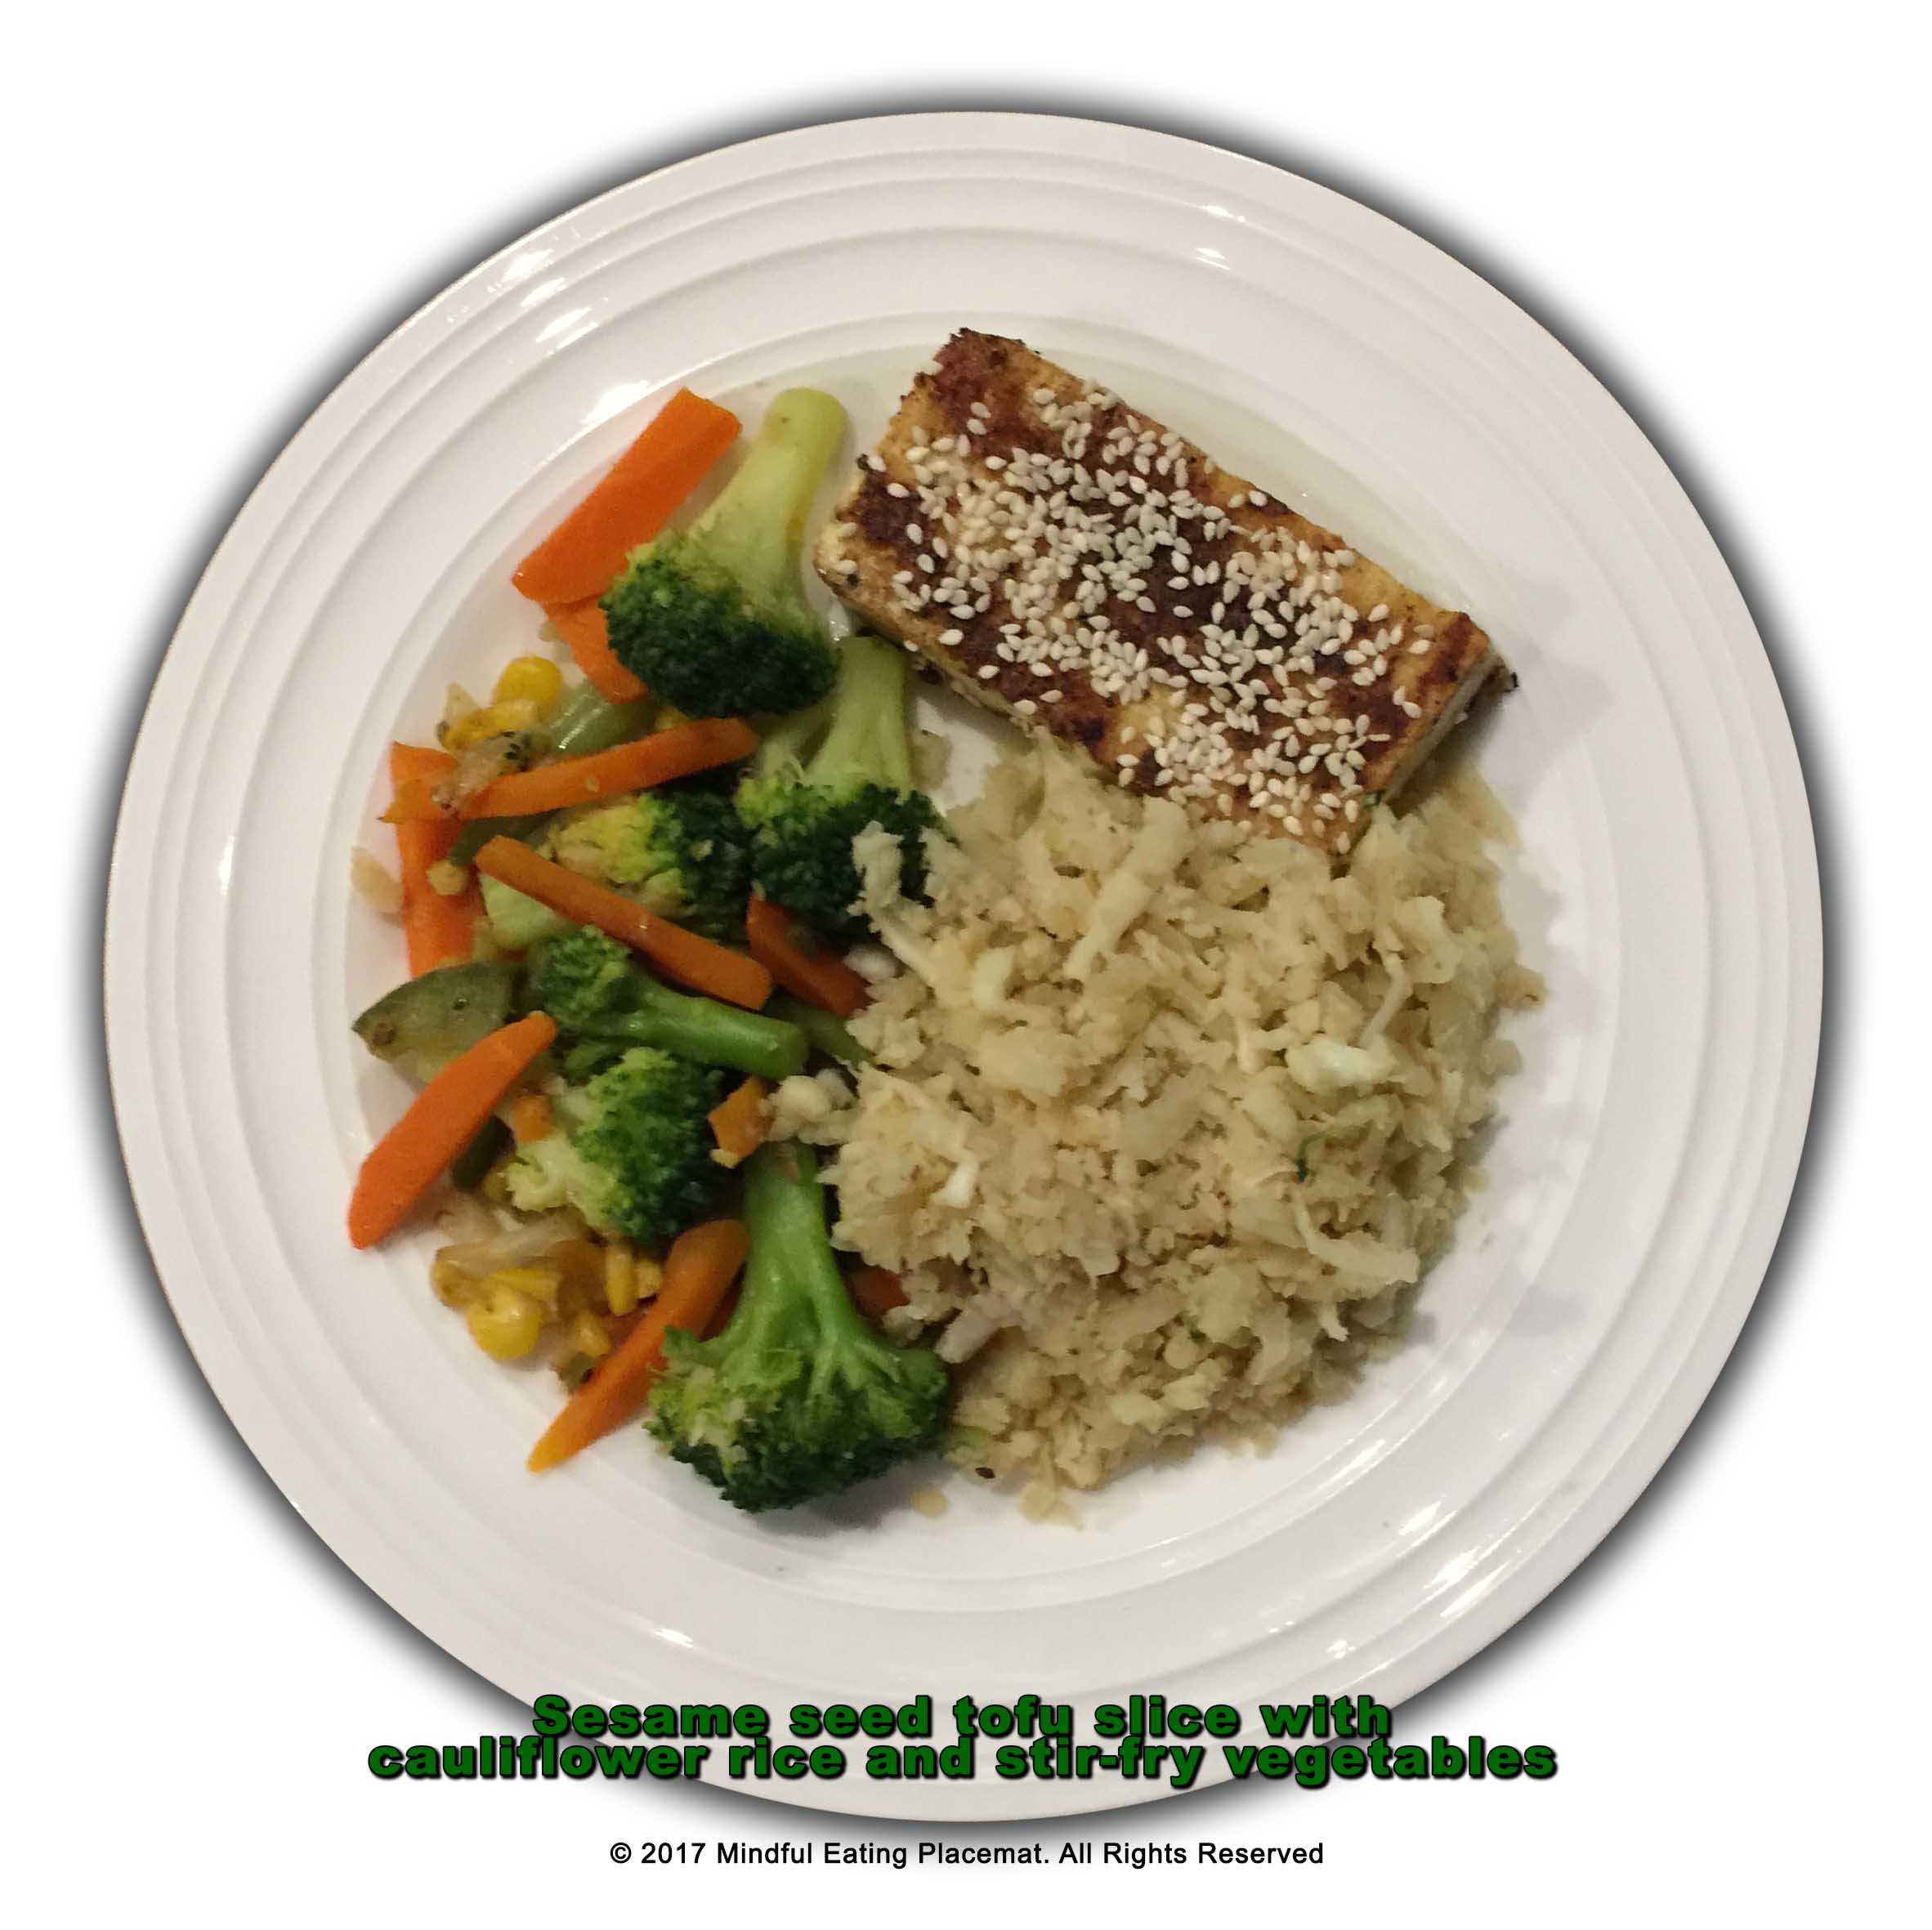 Sesame seed tofu slice with cauliflower rice and stir-fry vegetables